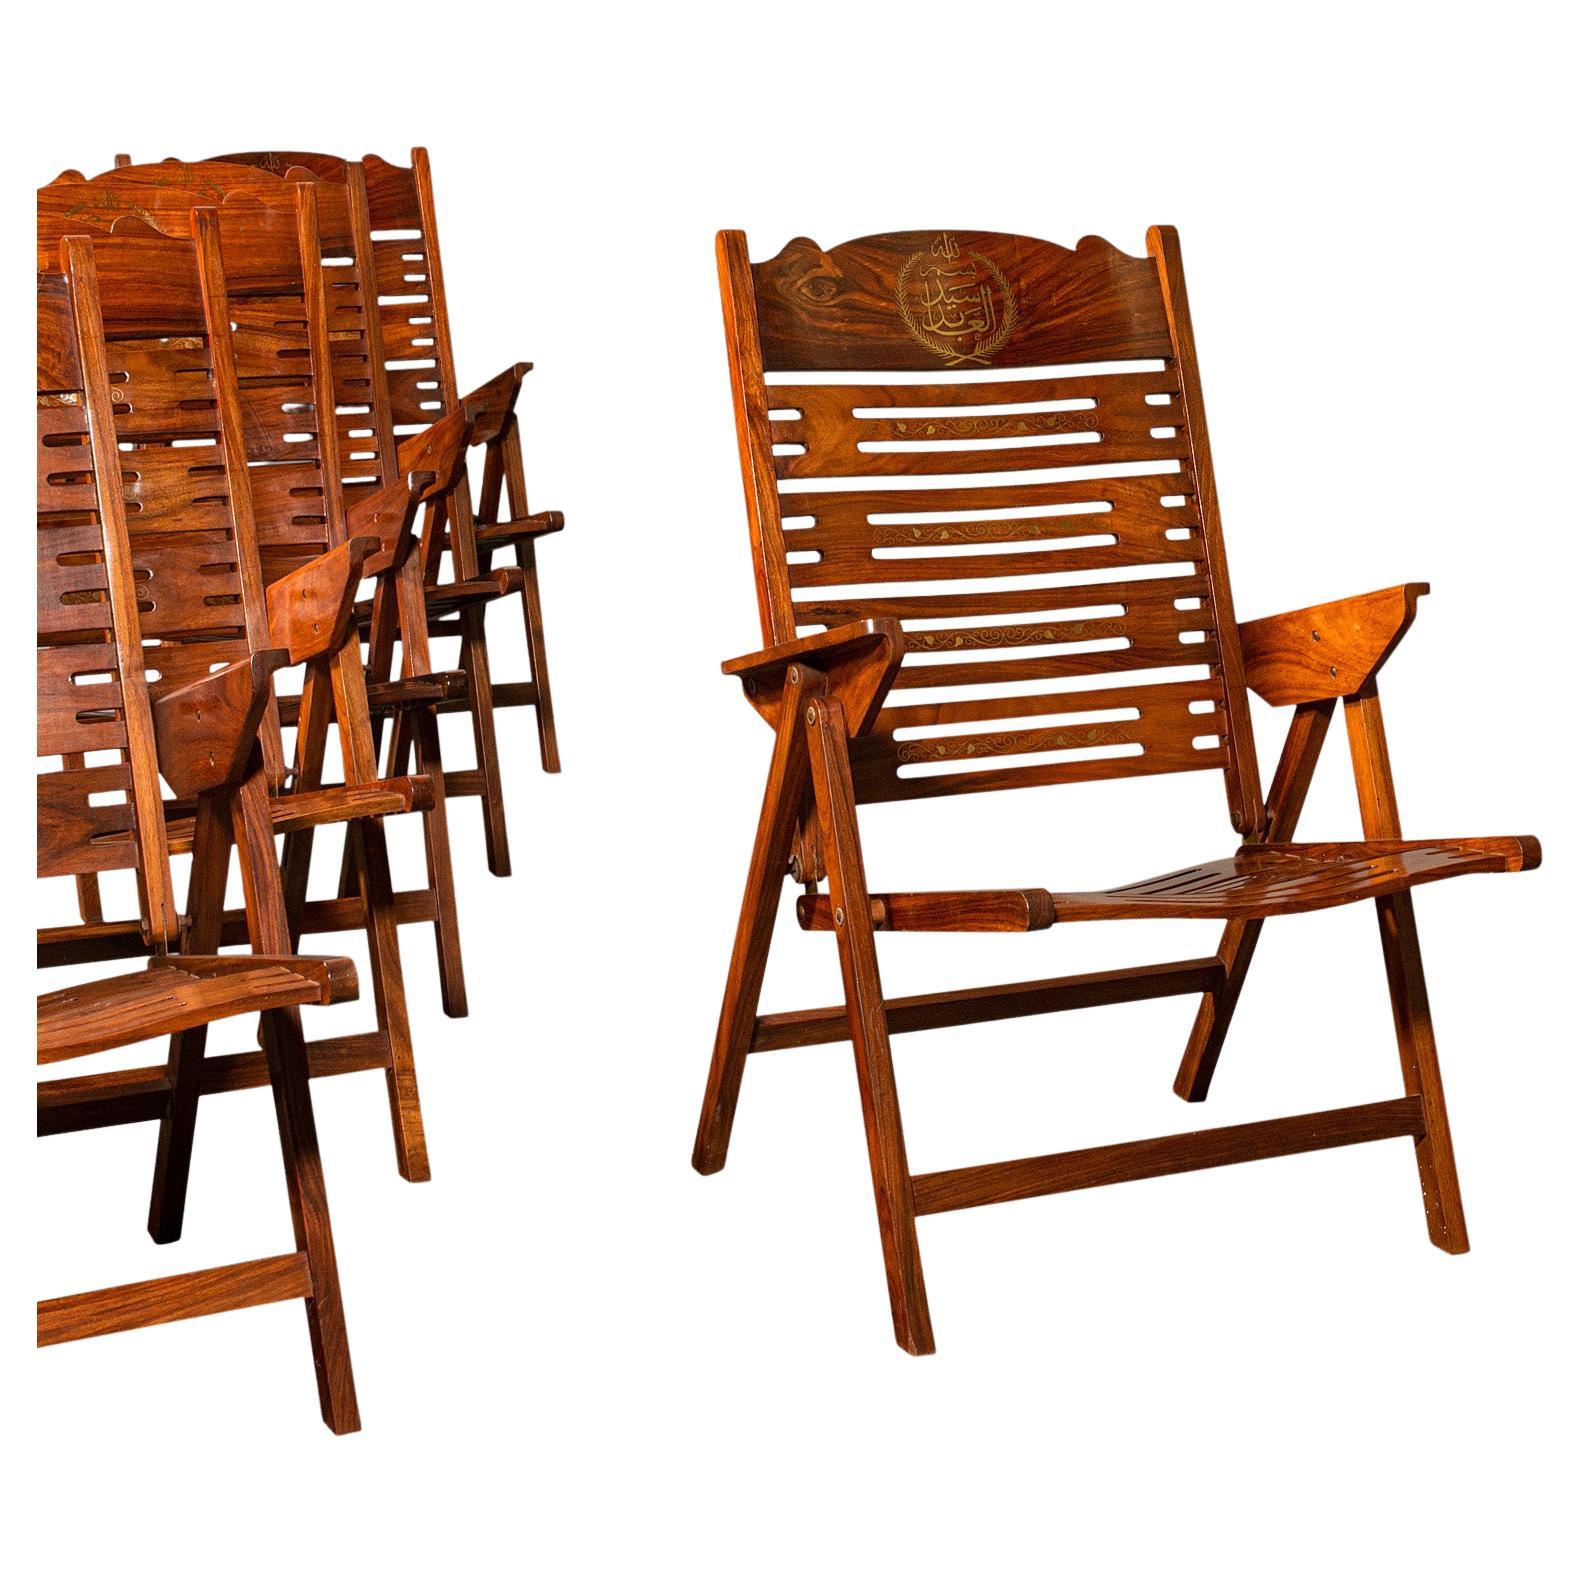 Set of 6 Vintage Terrace Chairs, Middle Eastern, Teak, Folding, Veranda, Steamer